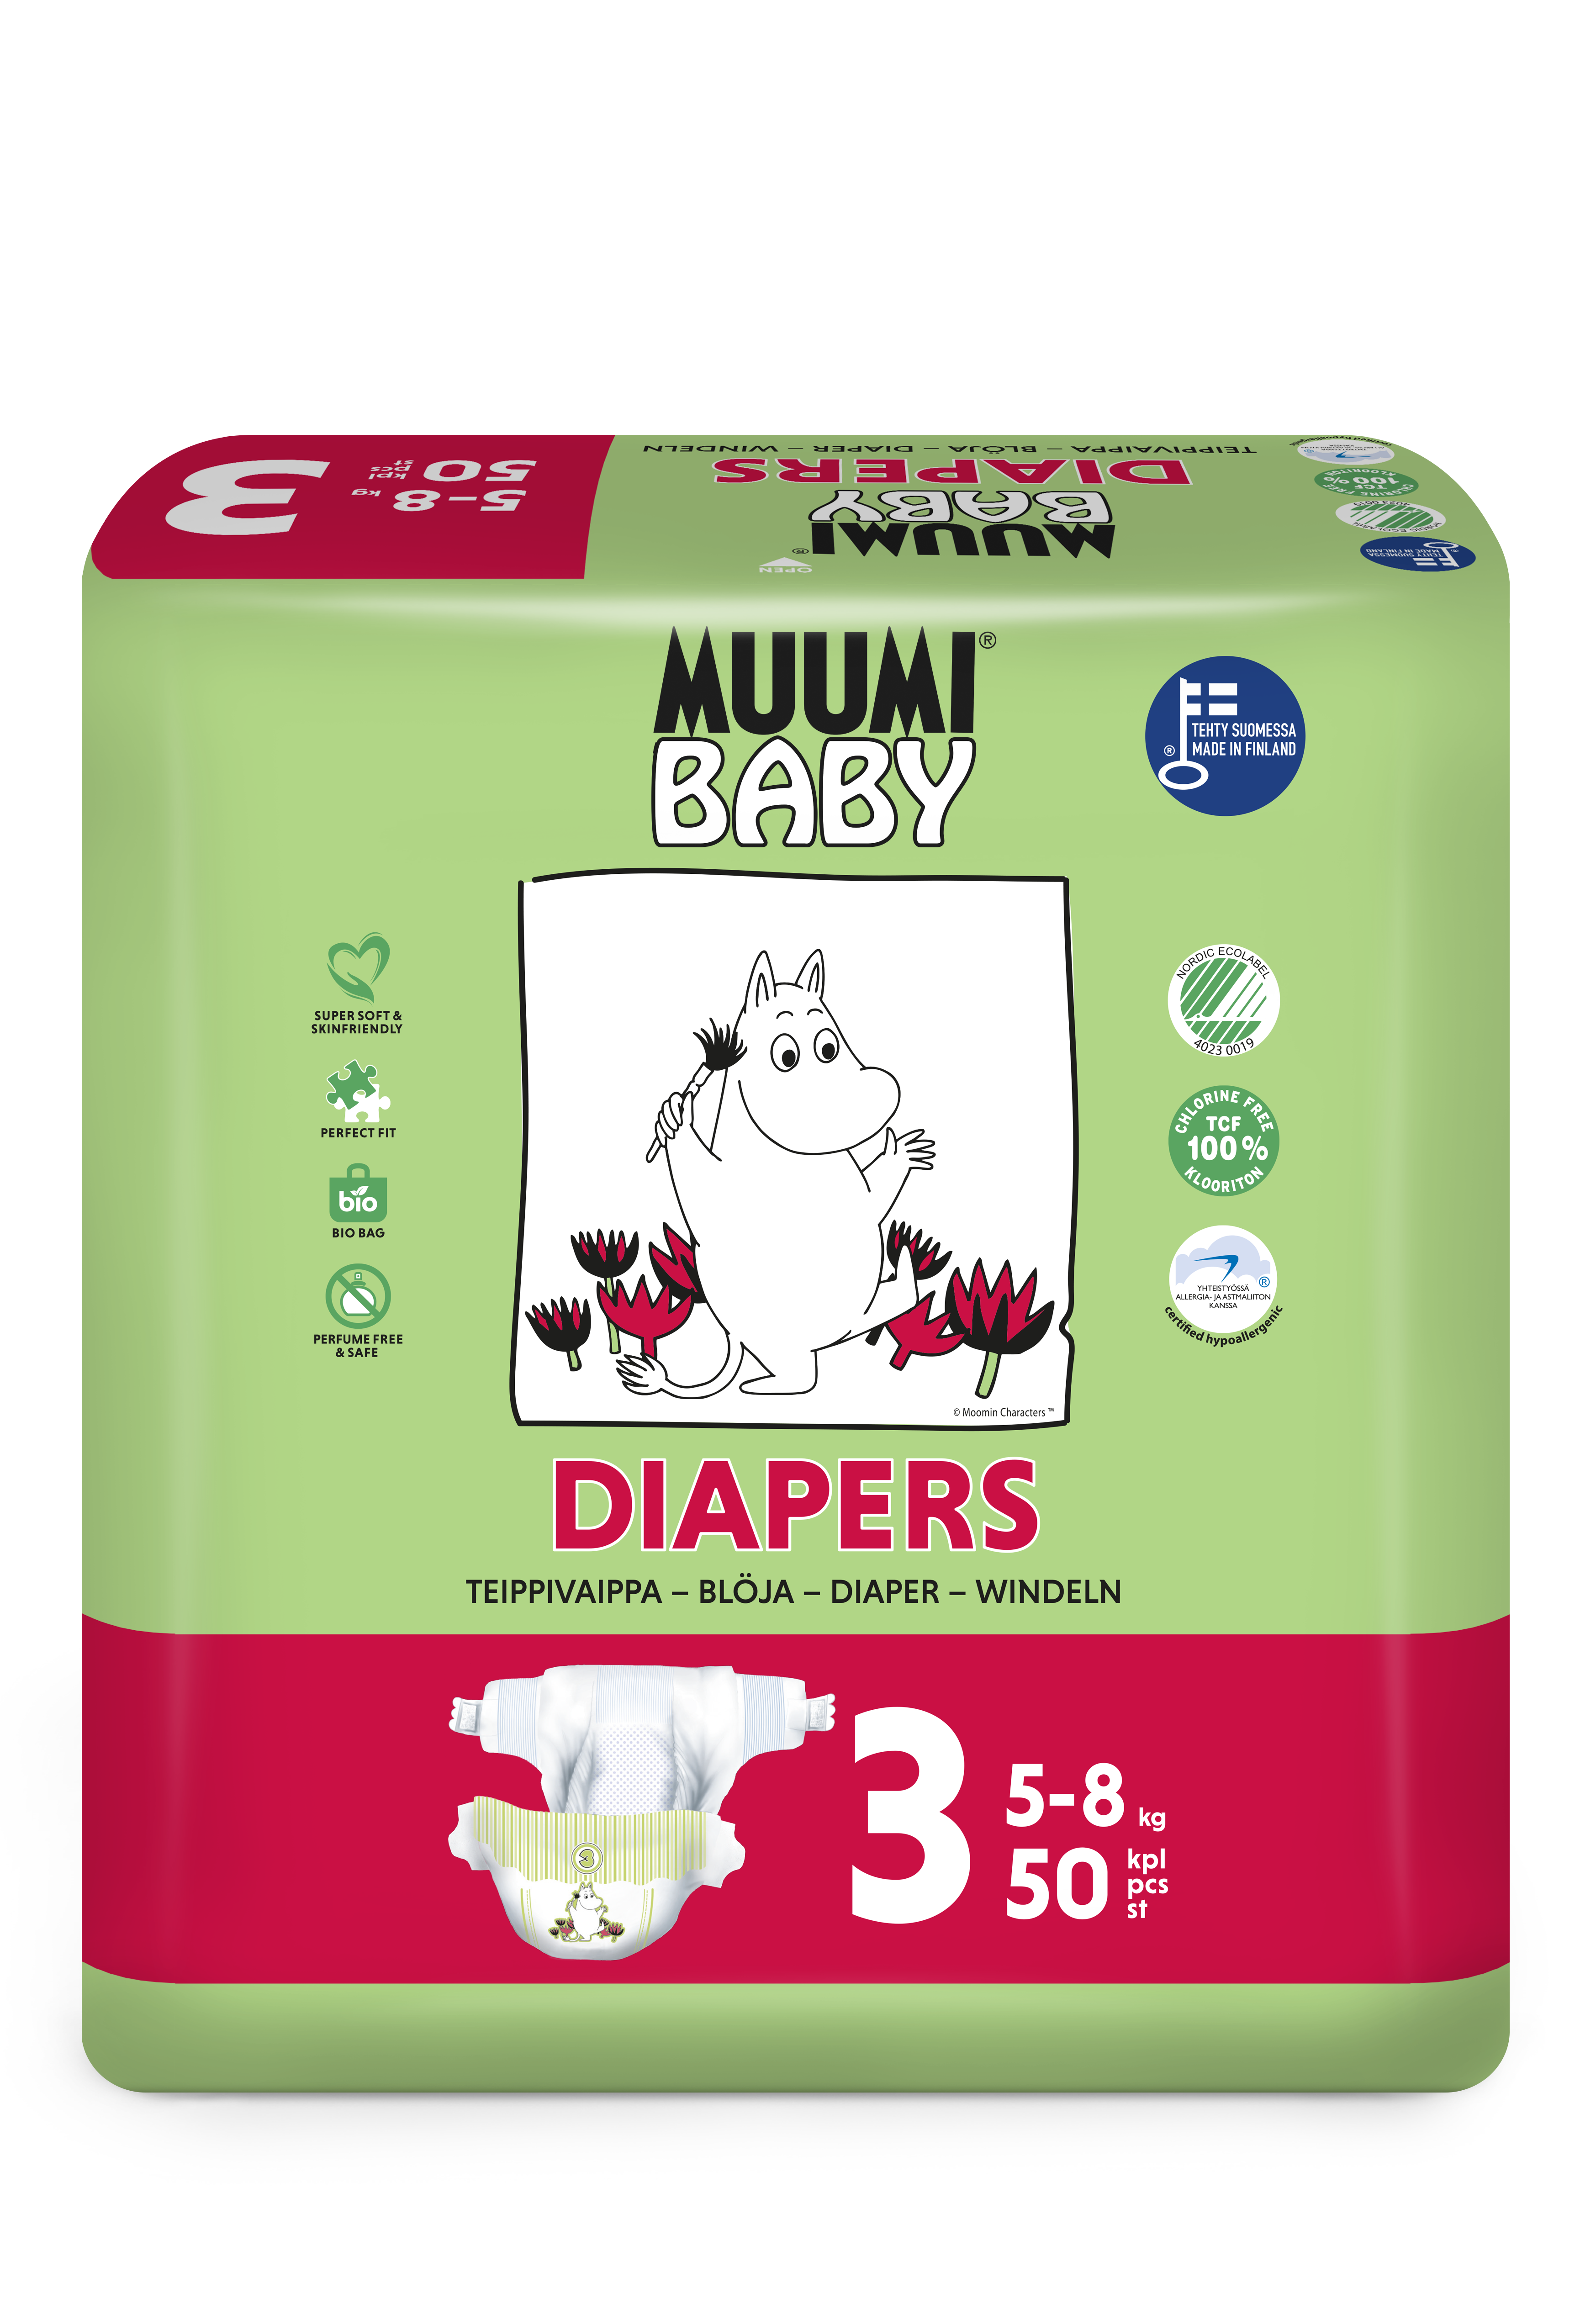 Delipap Muumi Baby Diapers 3